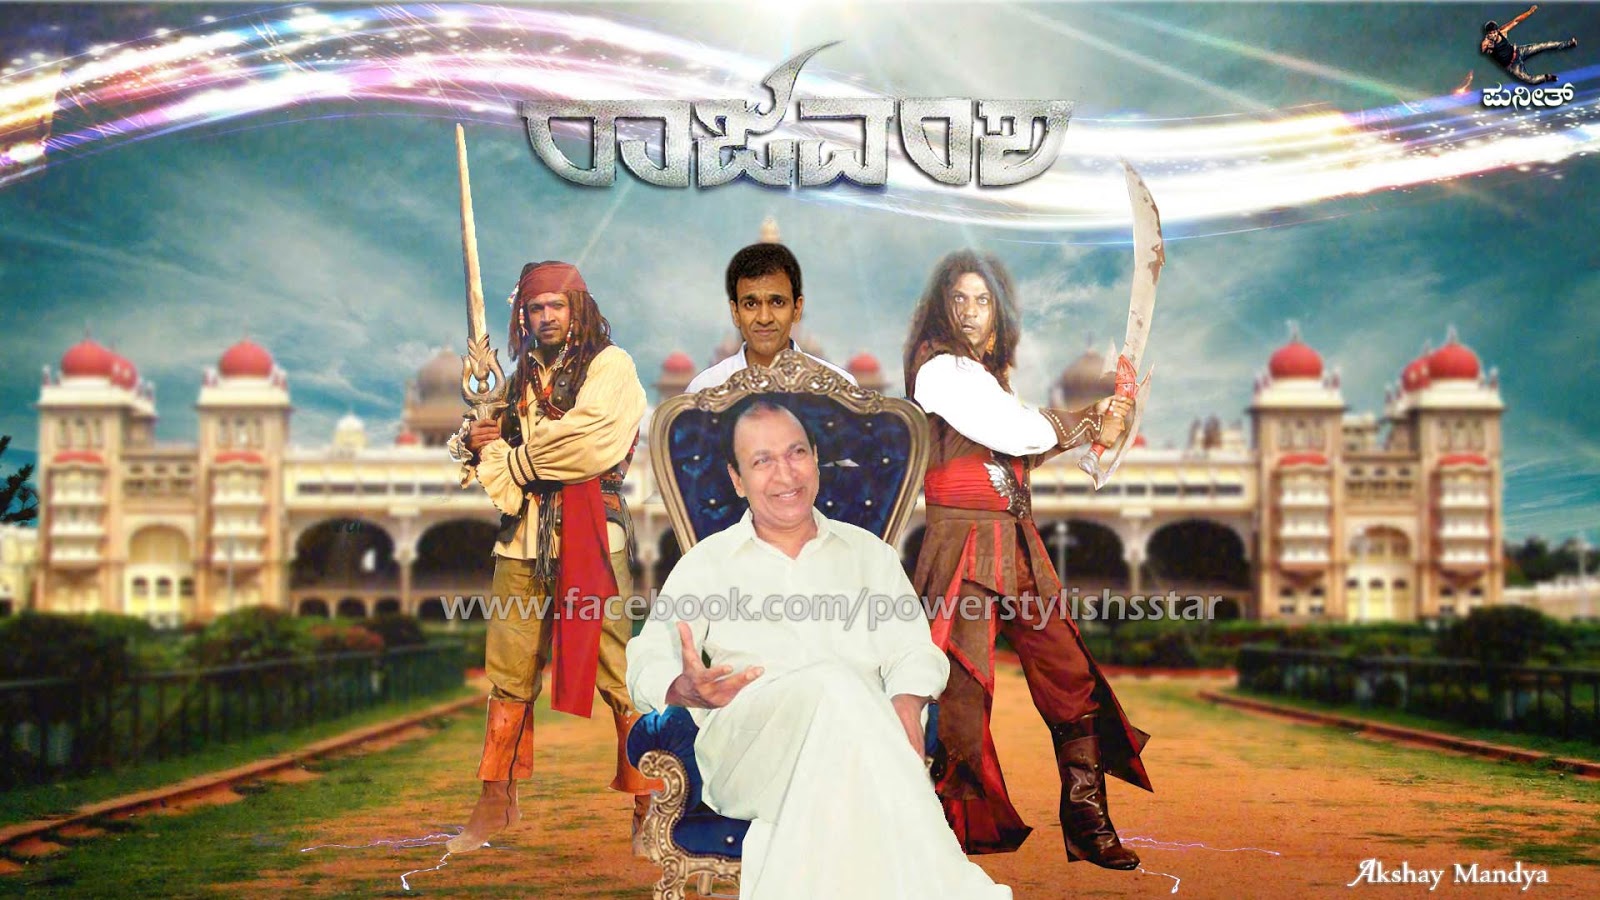 Power - Kannada Full HD Movie Kannada New Movies